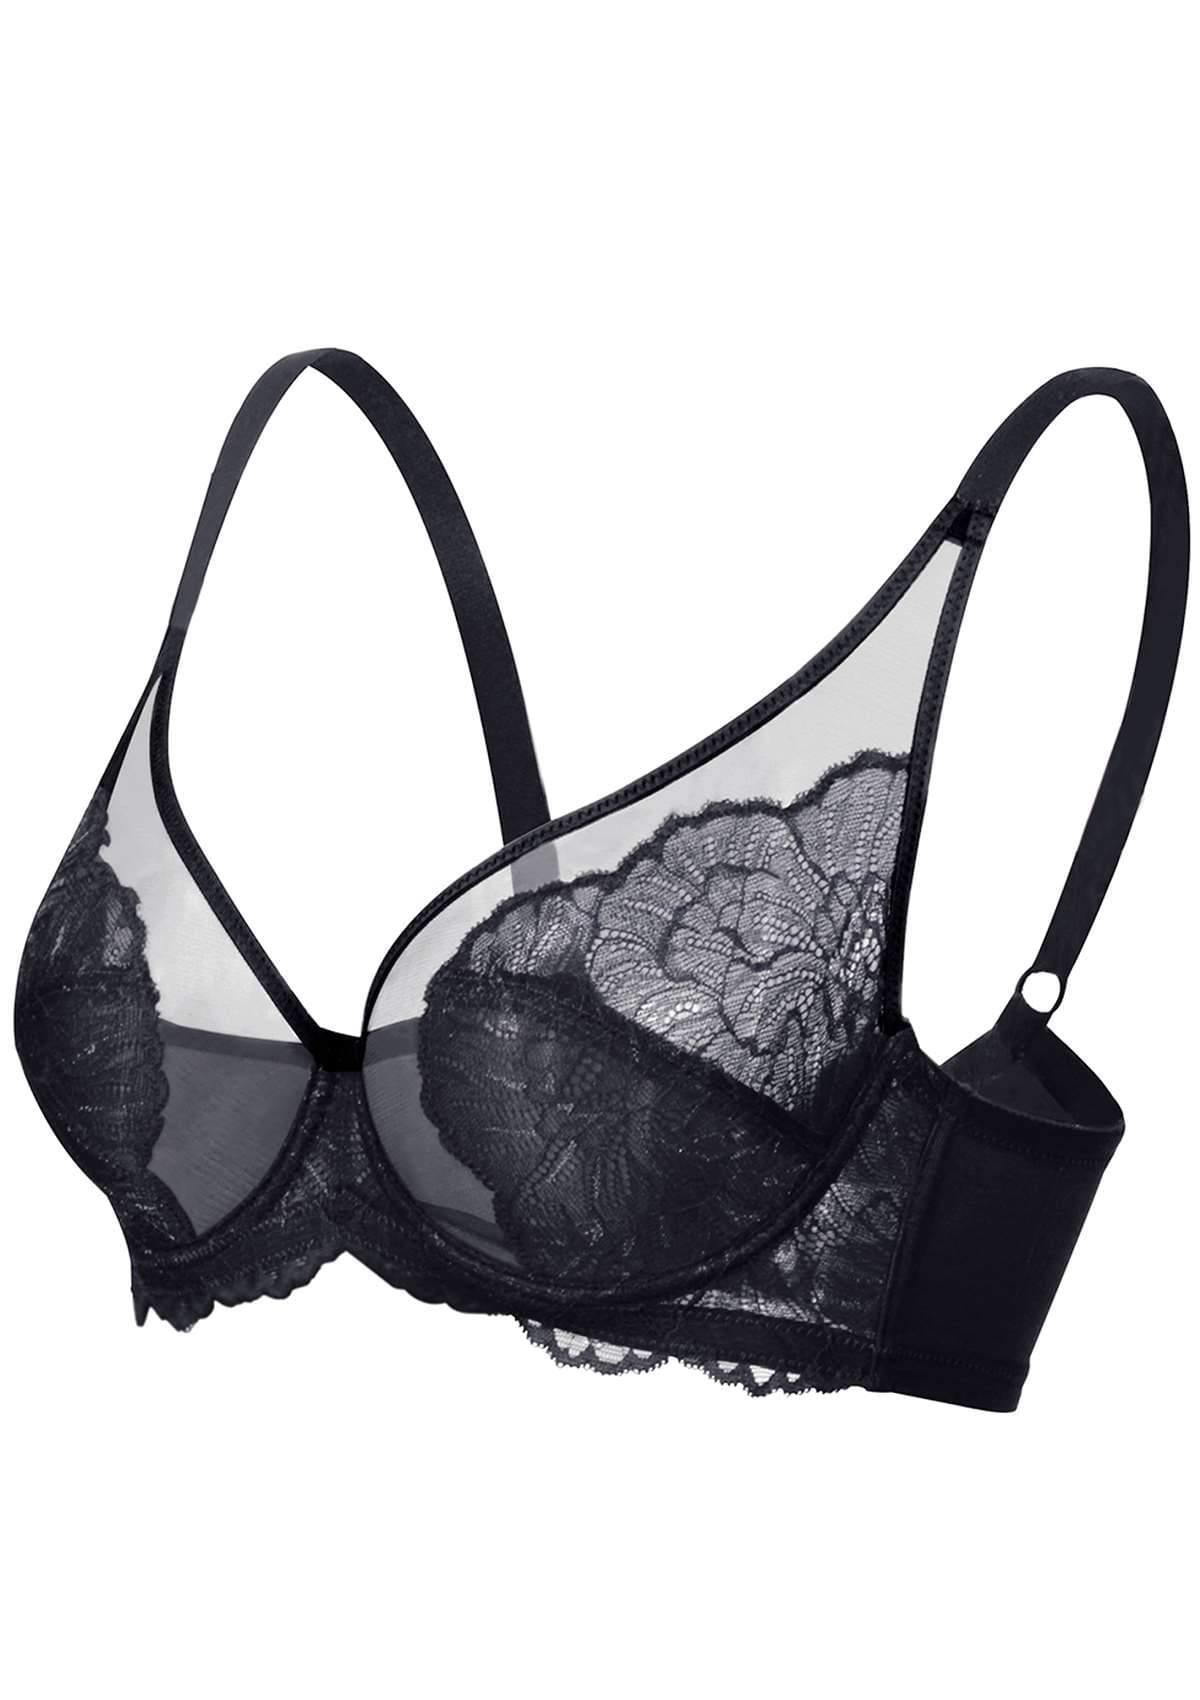 HSIA Blossom Matching Bra And Panties: Beautiful Everyday Bra - Black / 34 / DDD/F